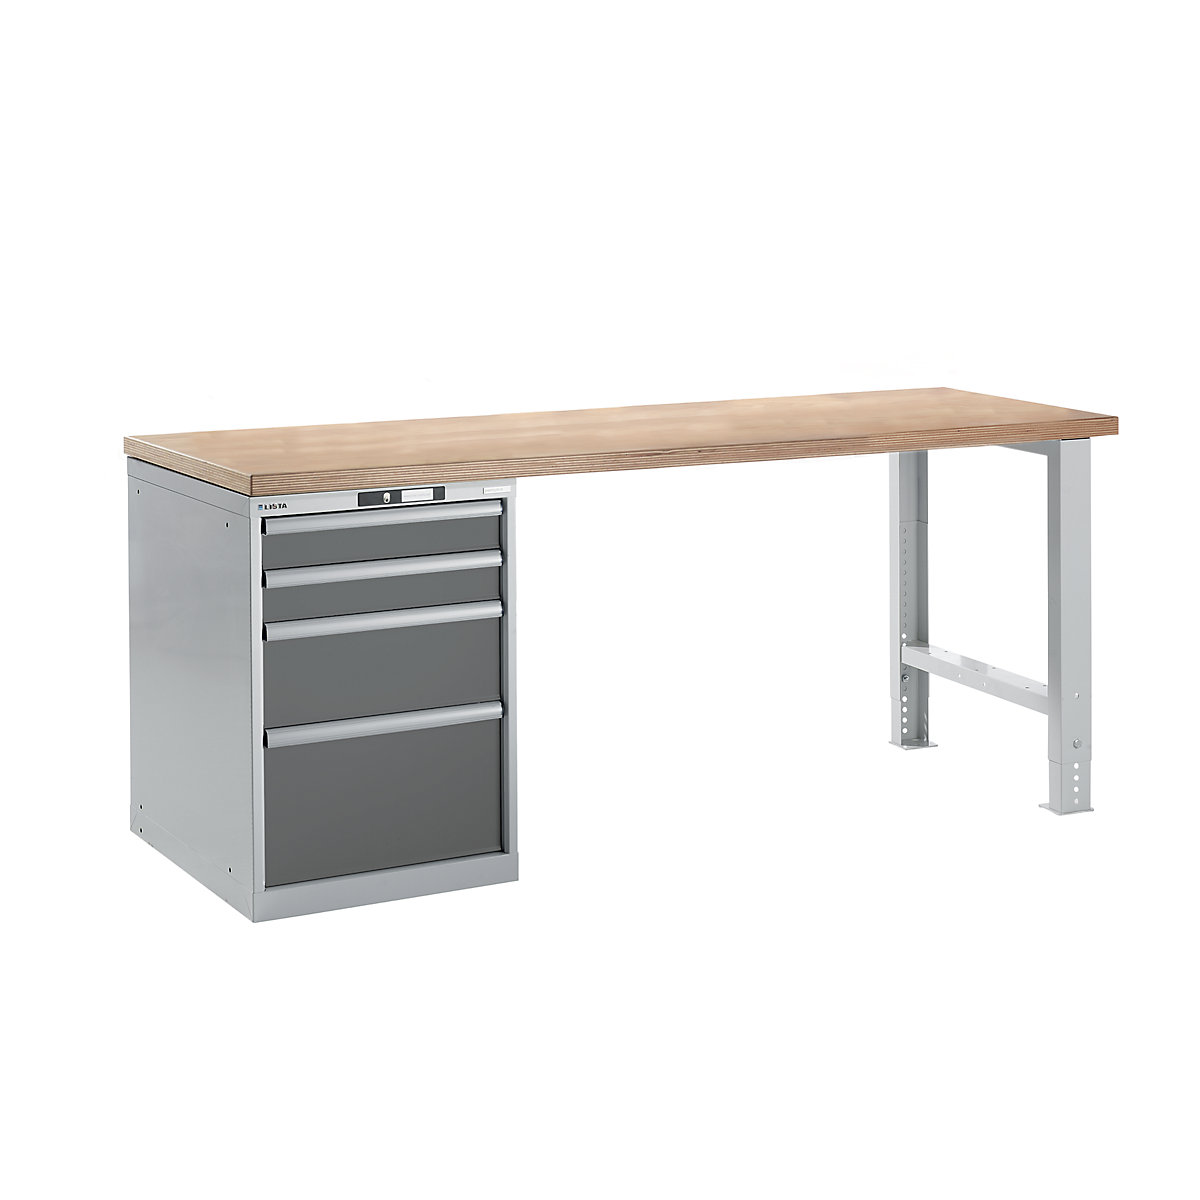 Modular workbench – LISTA, height 840 mm, pedestal drawer unit, 4 drawers, metallic grey, table width 2000 mm-16